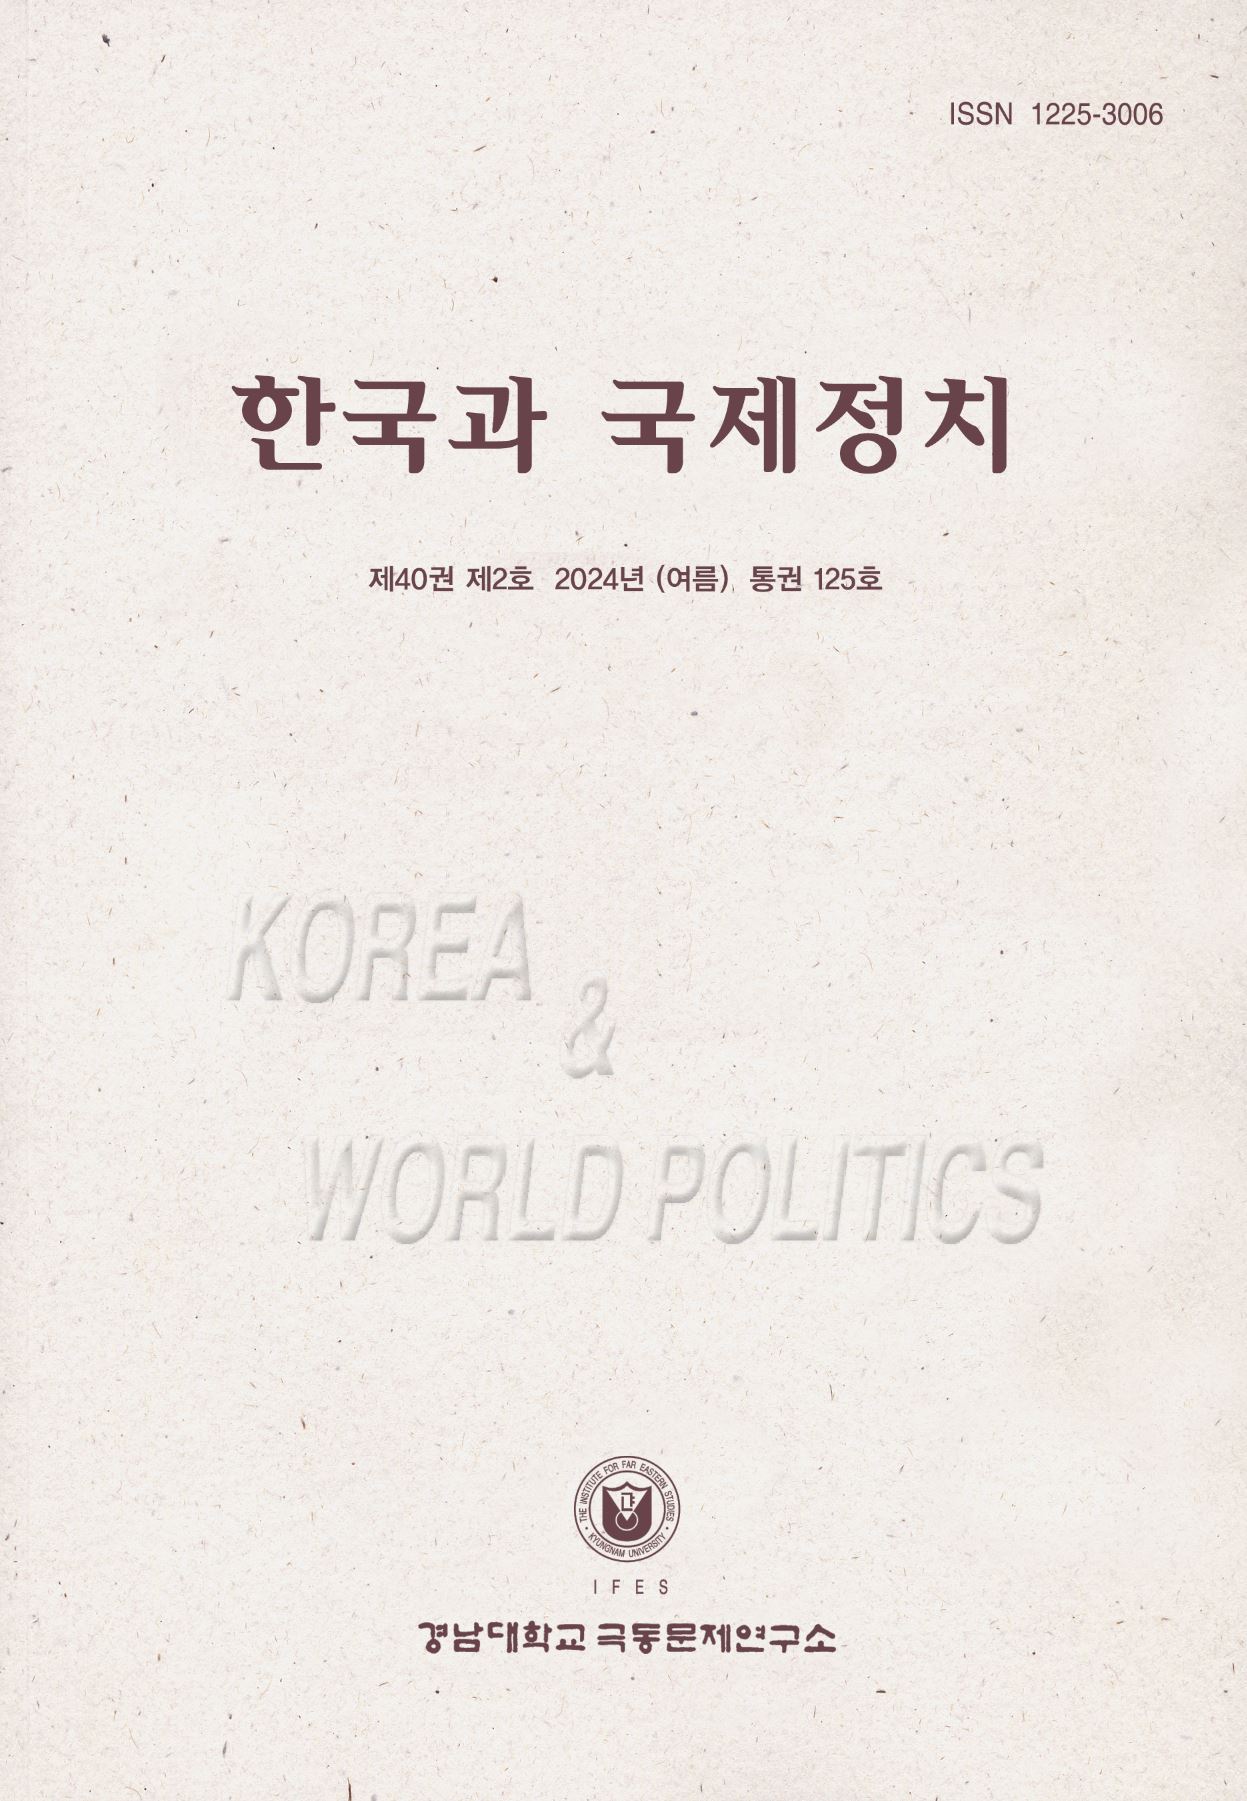 Korea and World Politics, Vol.40, No.2 Published 첨부 이미지